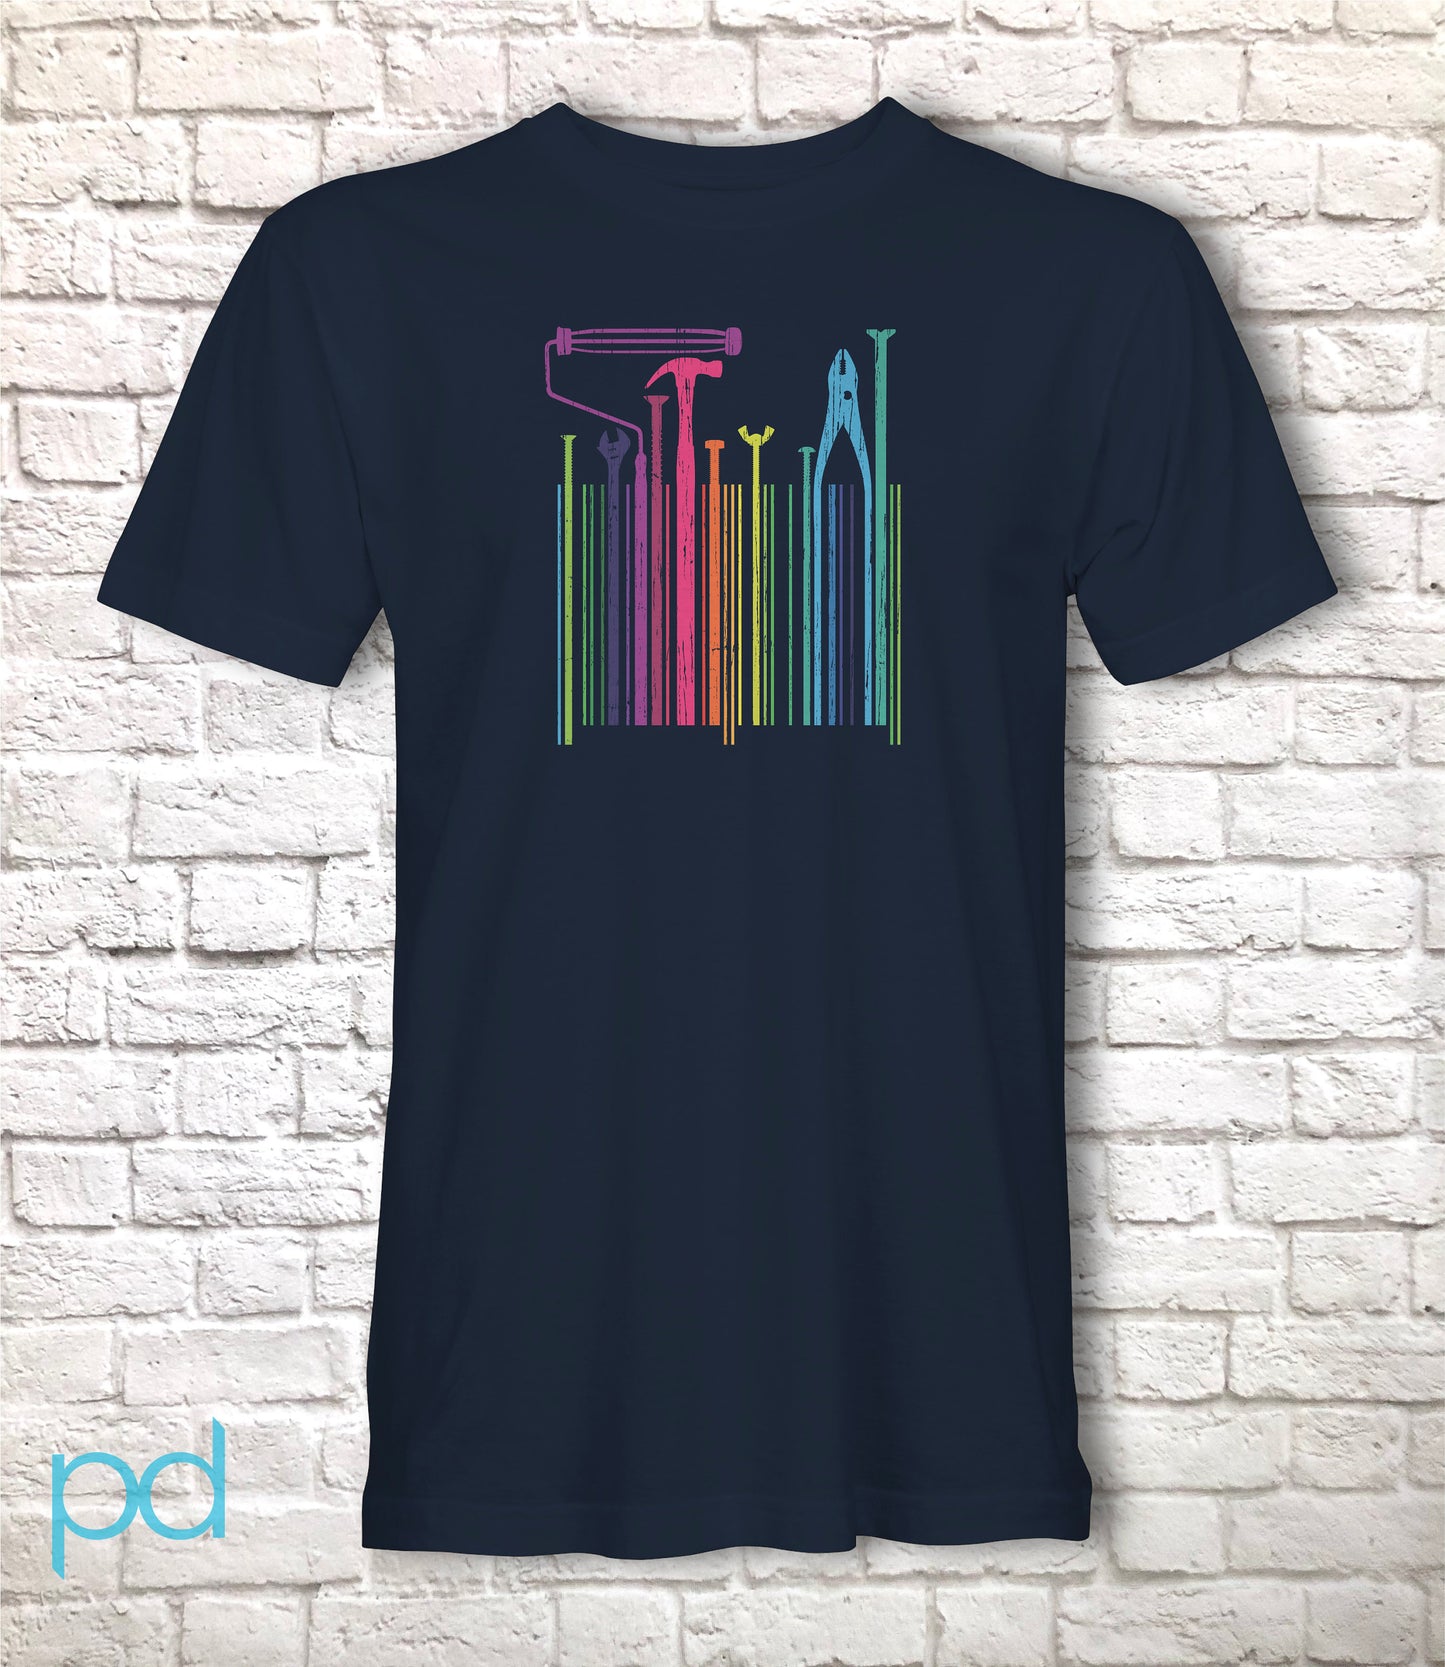 DIY T Shirt, Colourful Tools Gift T-Shirt Barcode Style, Tradesman Tradeswoman Unisex Tee Shirt Top For Men or Women